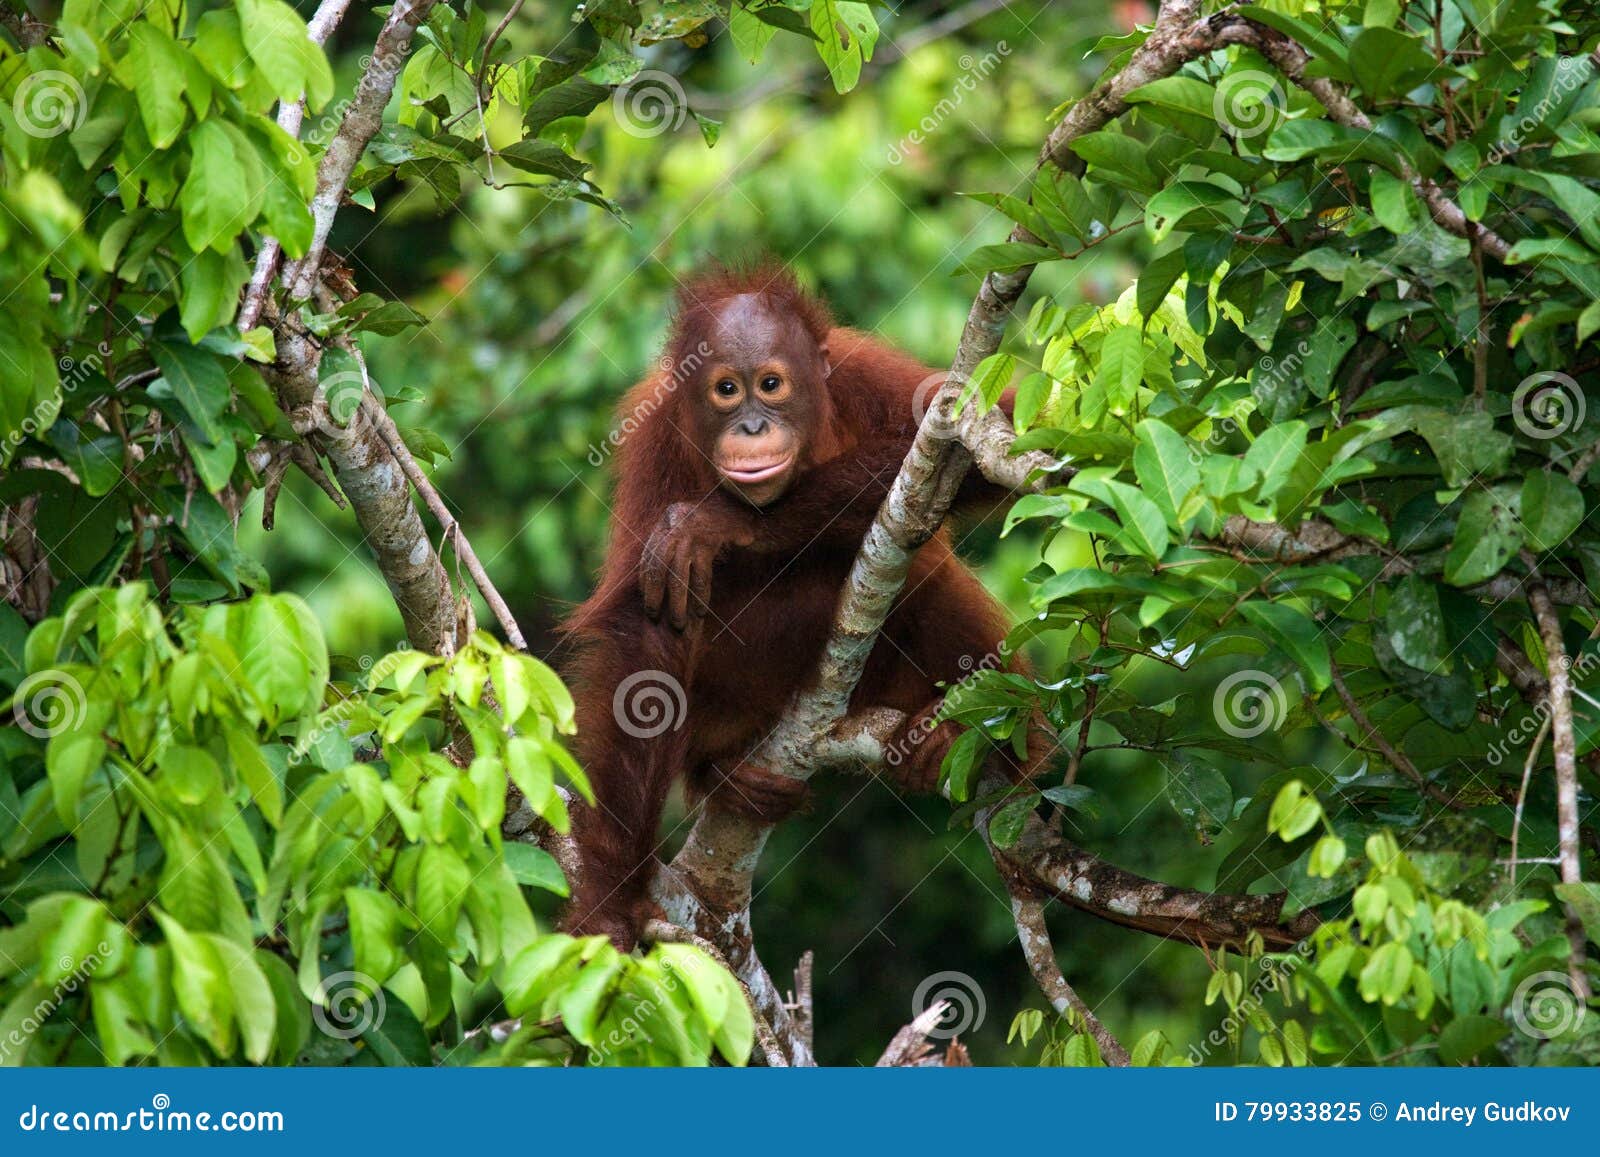 a baby orangutan in the wild. indonesia. the island of kalimantan (borneo).